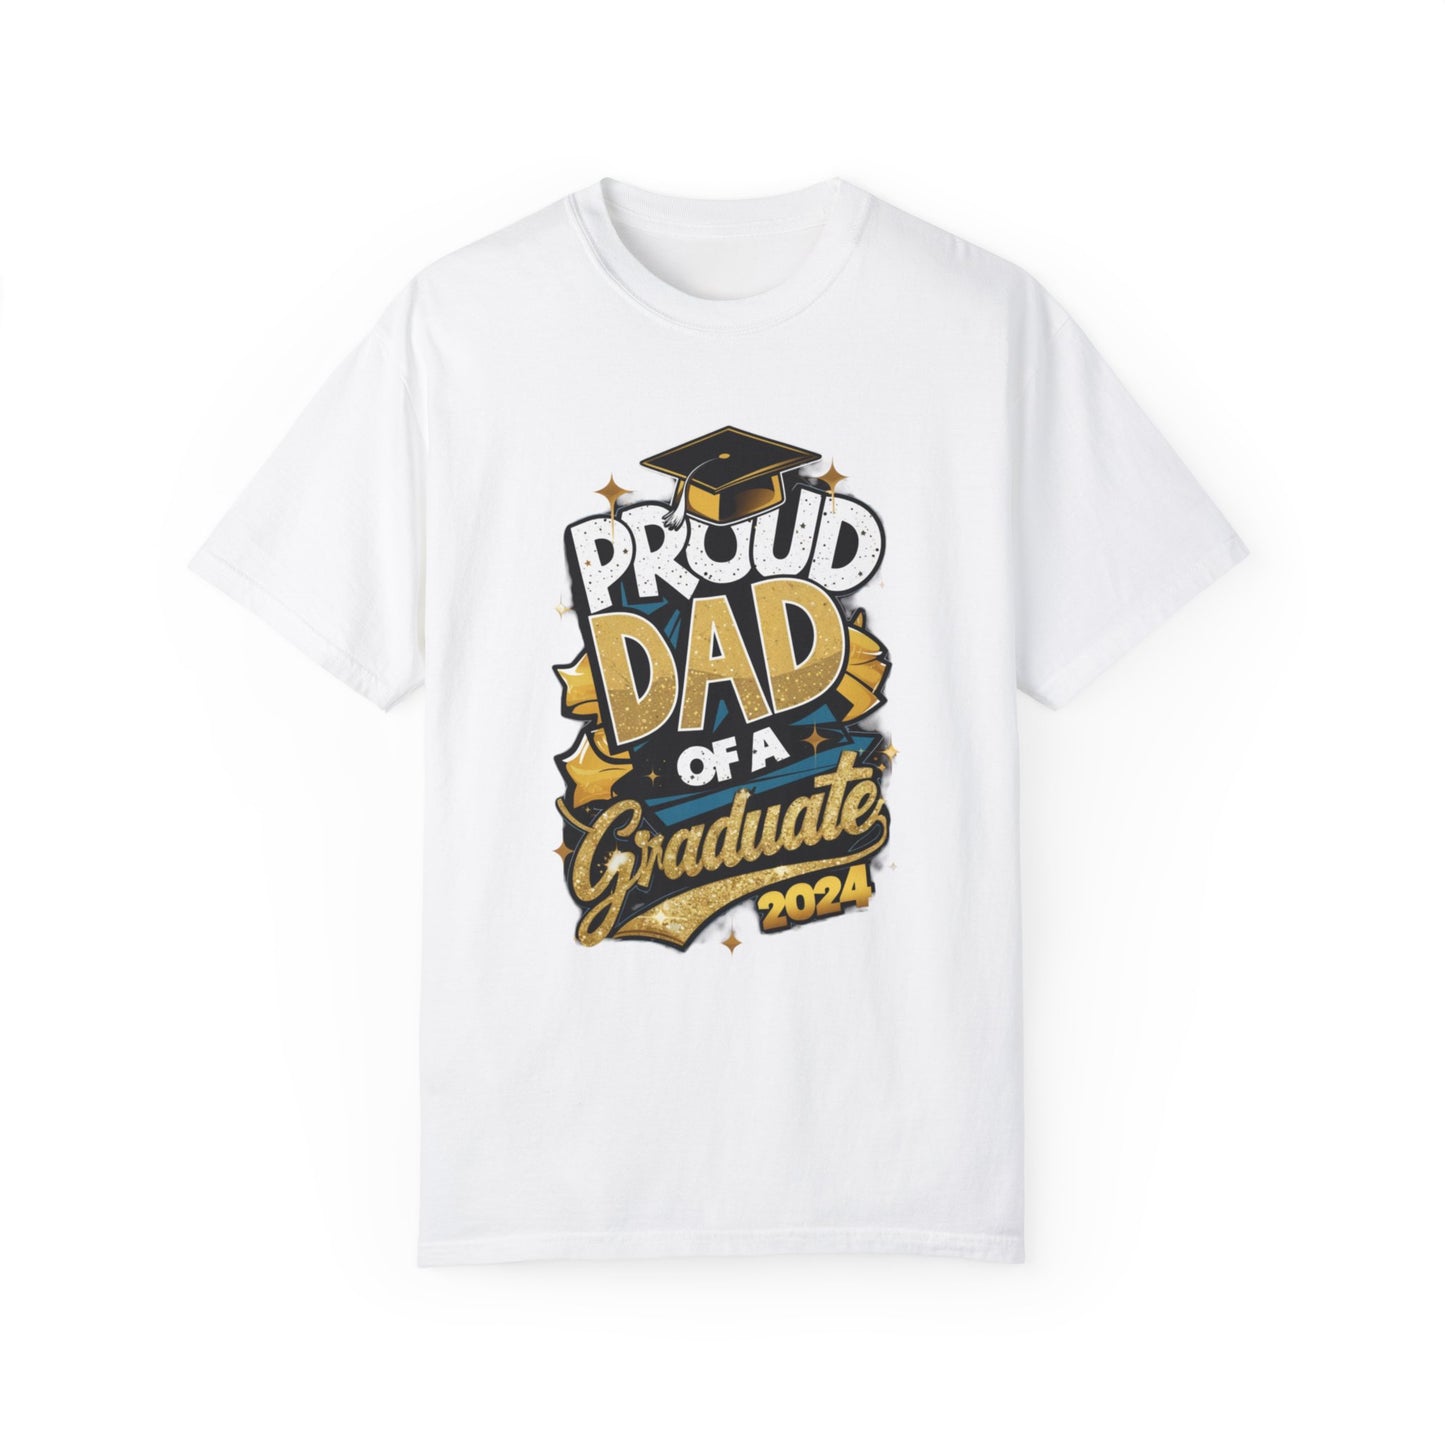 Proud Dad of a 2024 Graduate Unisex Garment-dyed T-shirt Cotton Funny Humorous Graphic Soft Premium Unisex Men Women White T-shirt Birthday Gift-3